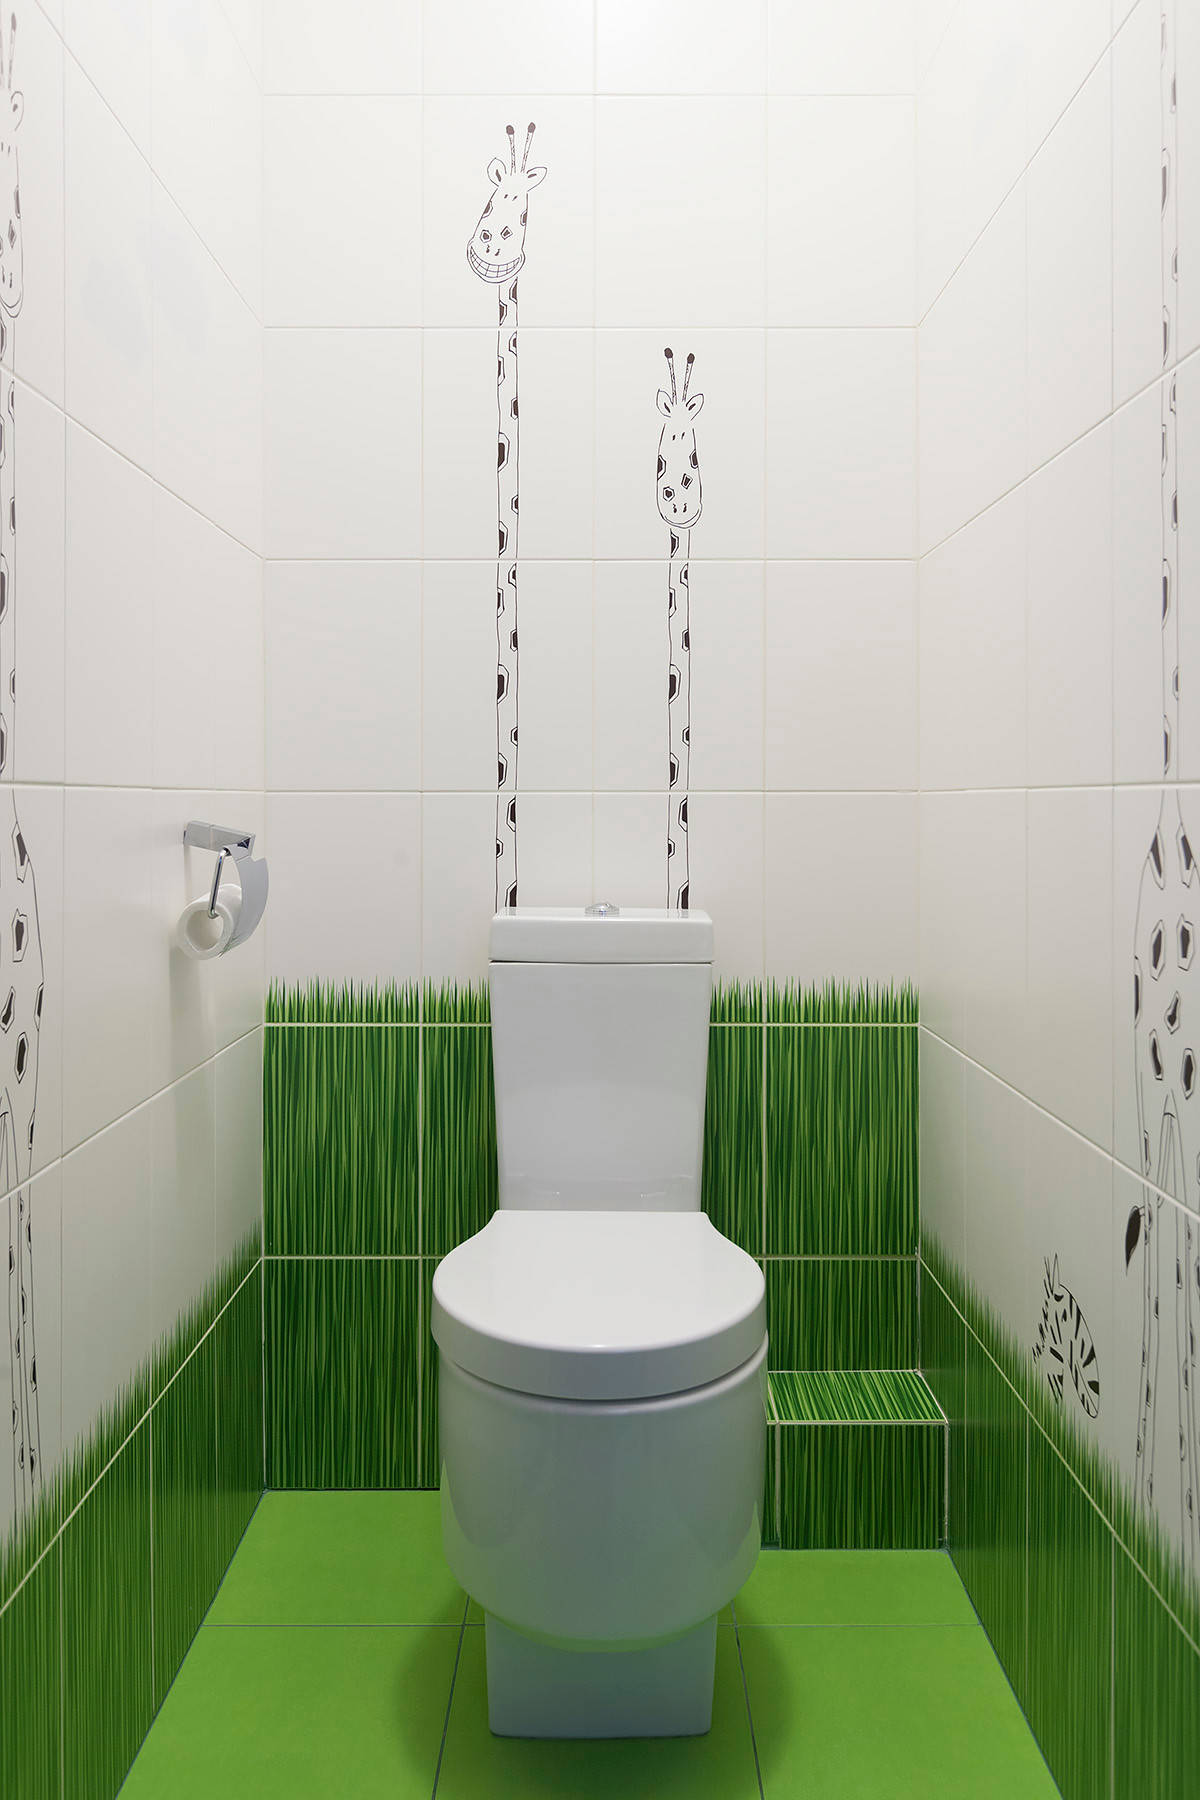 Туалет цвет зеленый. Плитка в туалет. Интерьер туалета. Плитка для туалетной комнаты. Кафельная плитка для туалета.